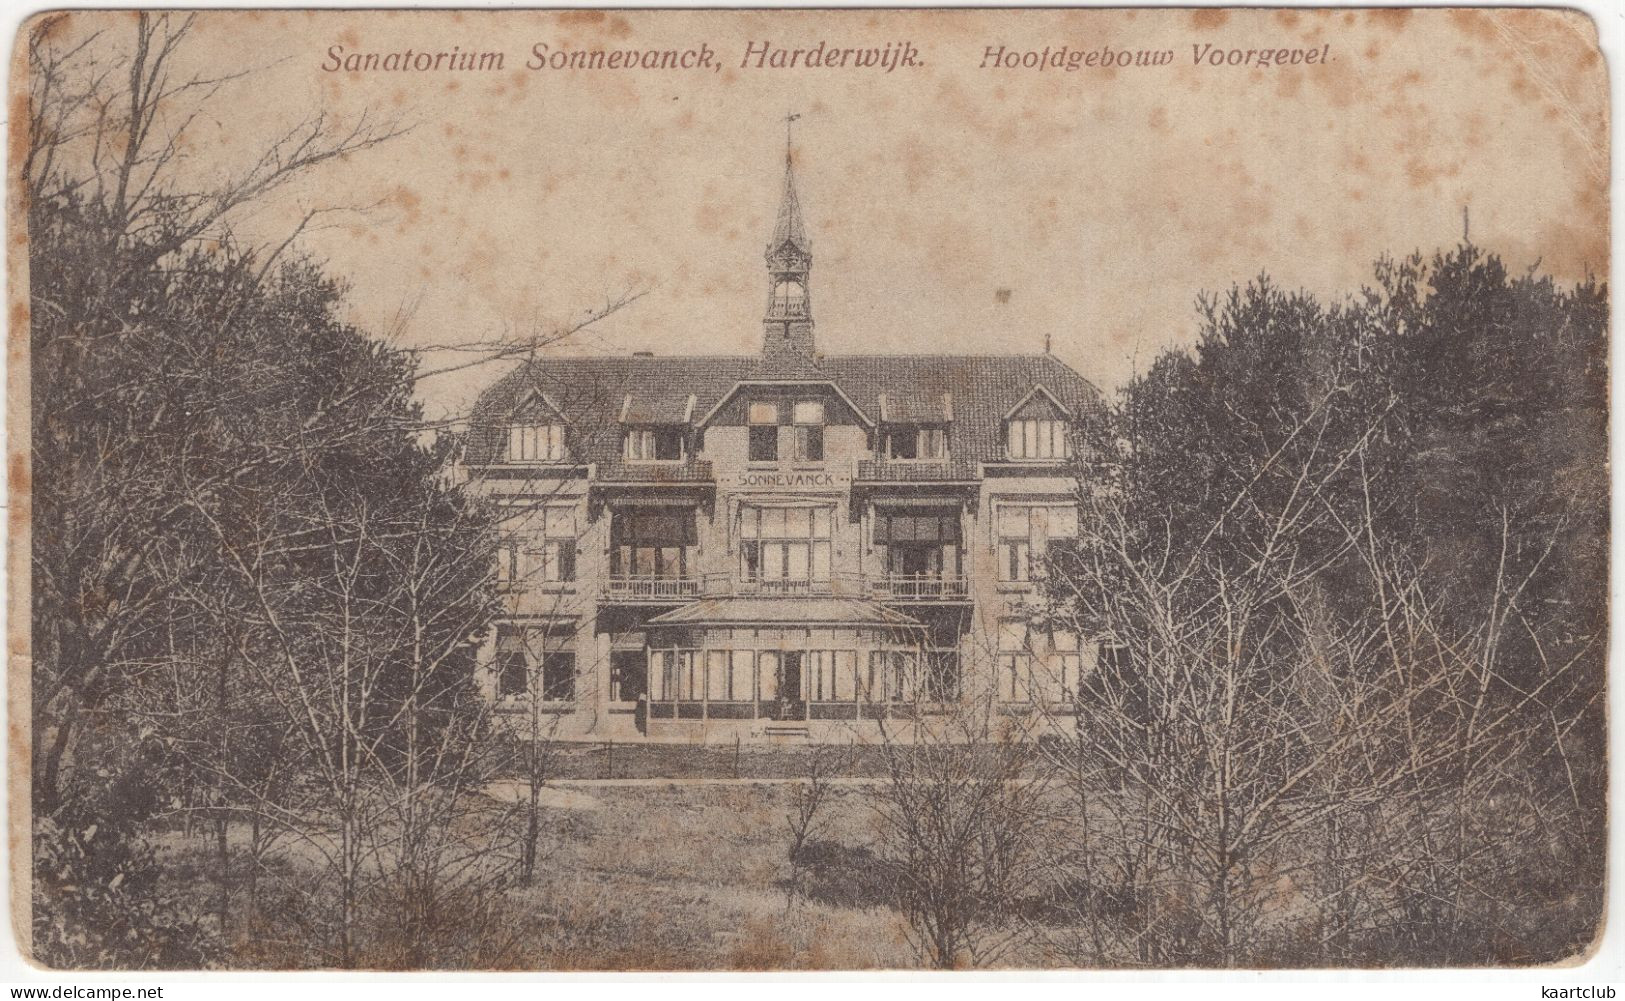 Sanatorium 'Sonnevanck', Harderwijk  - Hoofdgebouw Voorgevel- (Gelderland, Nederland//Holland) - 1924 - Harderwijk